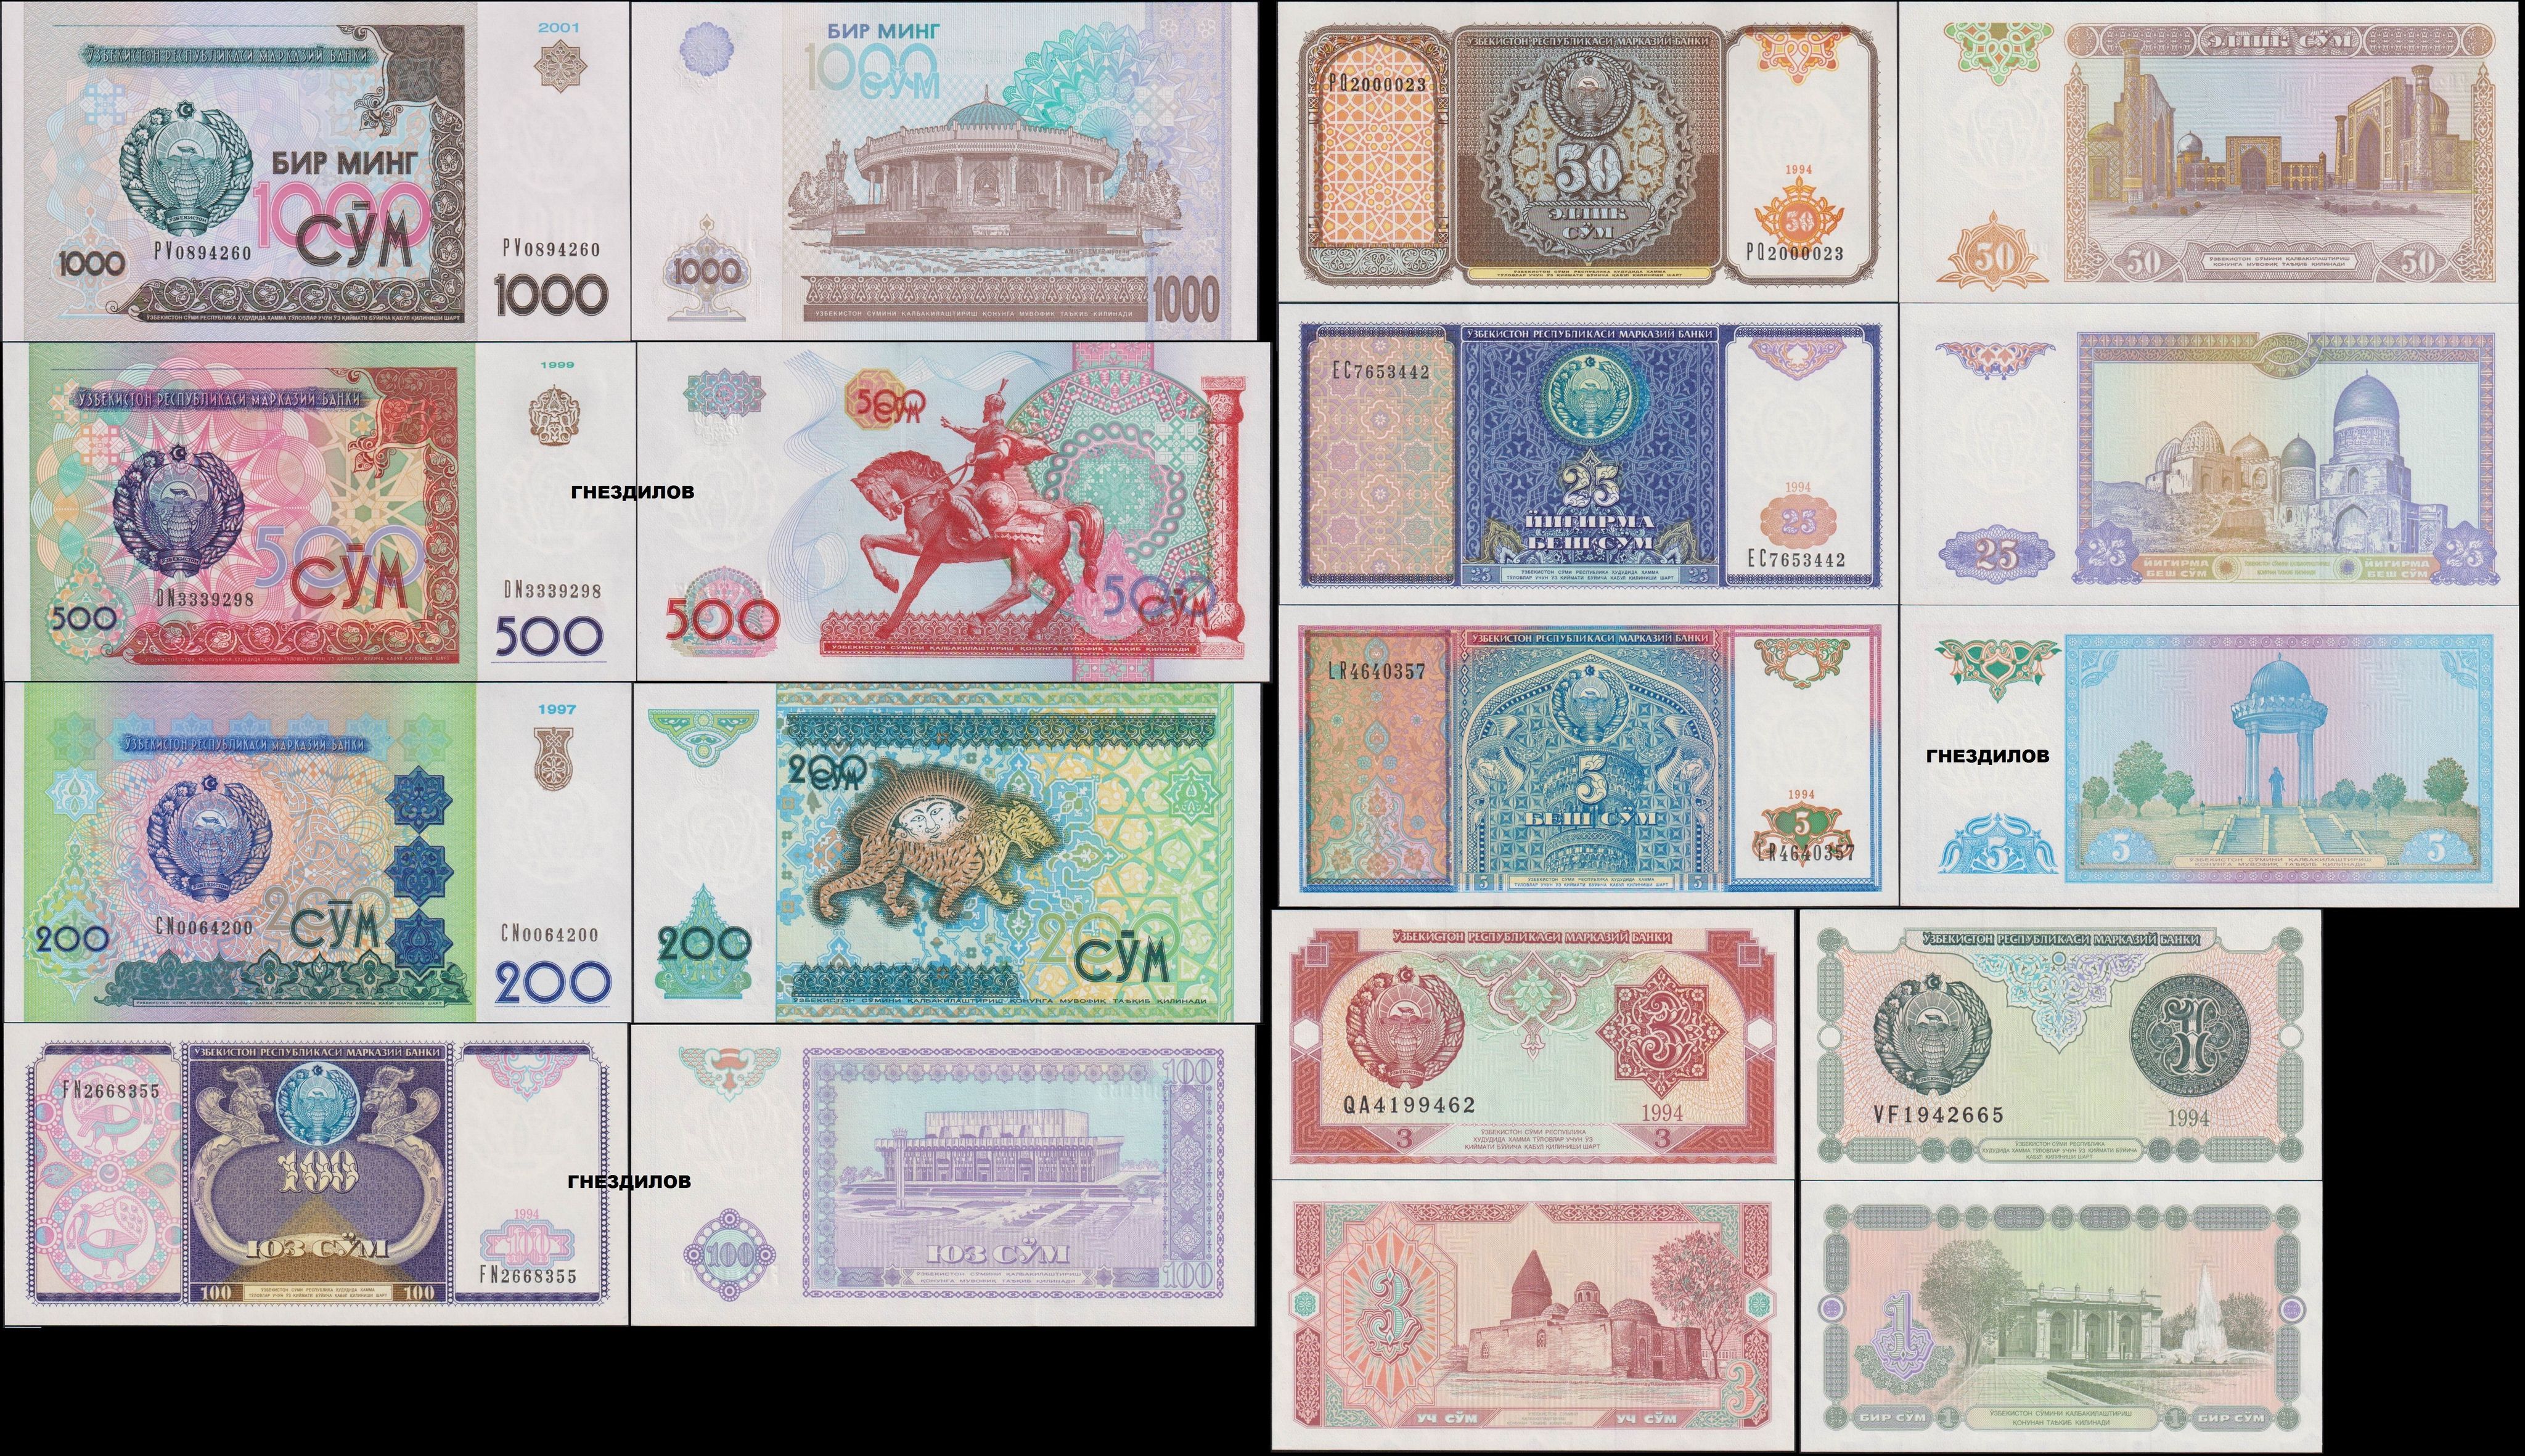 Сколько сум в 1 рубле. 100 Сум 1994 Узбекистан. 5 Сум 1994 Узбекистан. Банкноты Узбекистана. Узбекистан набор банкнот.